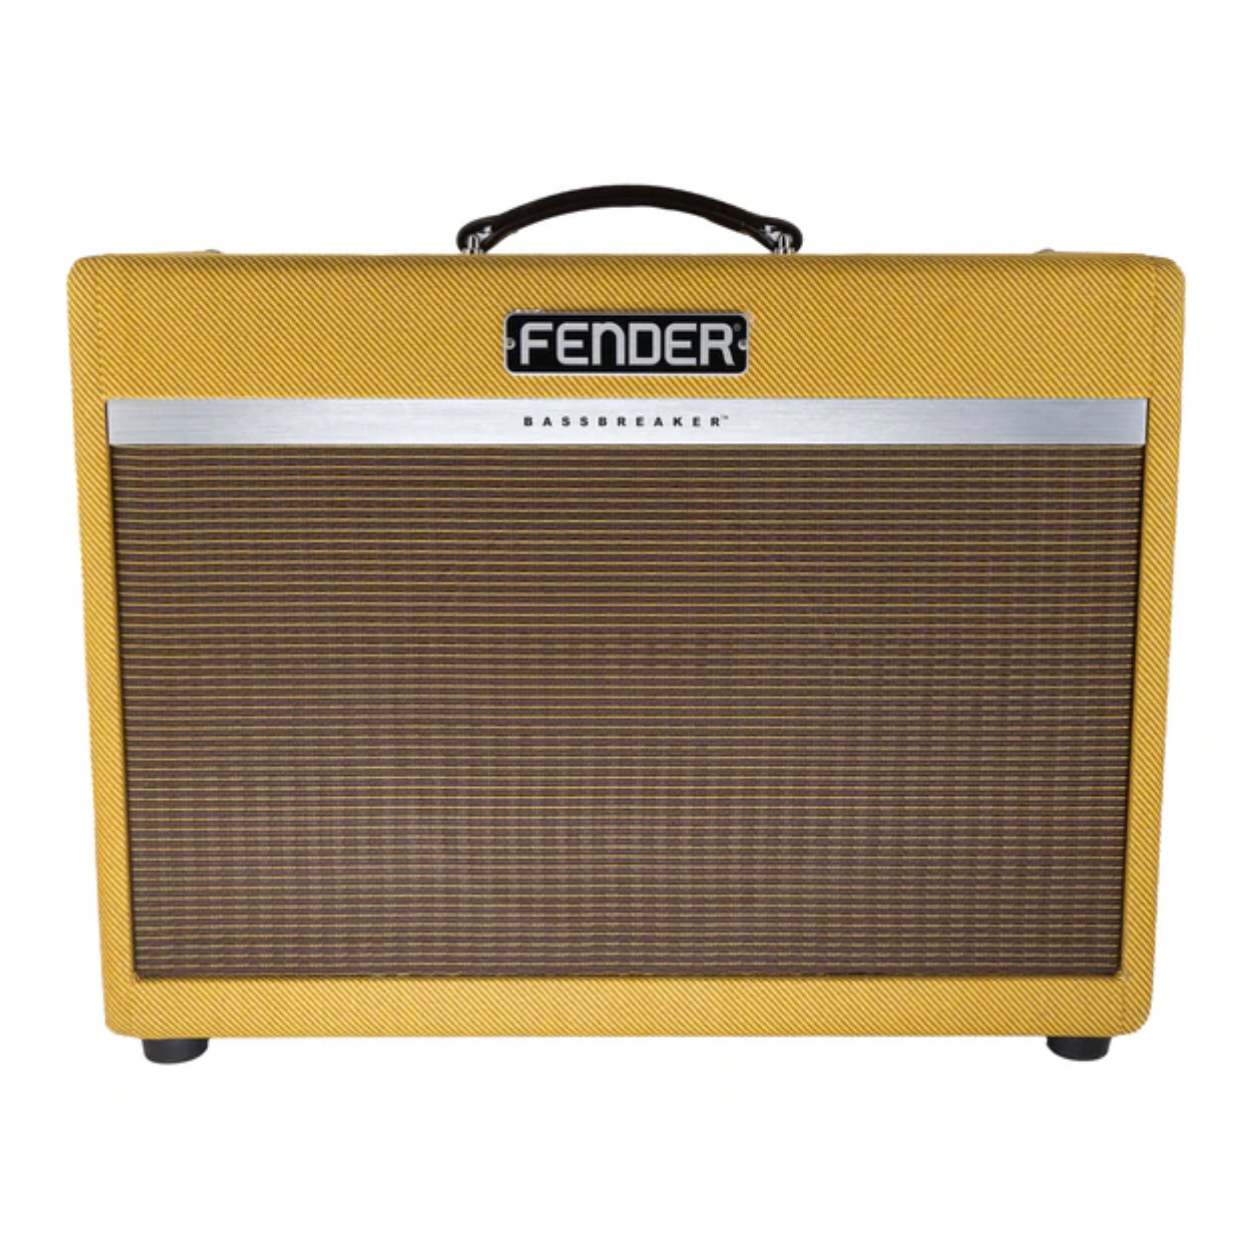 Fender 2020 Limited Edition Bassbreaker 30R Tube Combo Amplifier, Lacquered Tweed, 230V UK